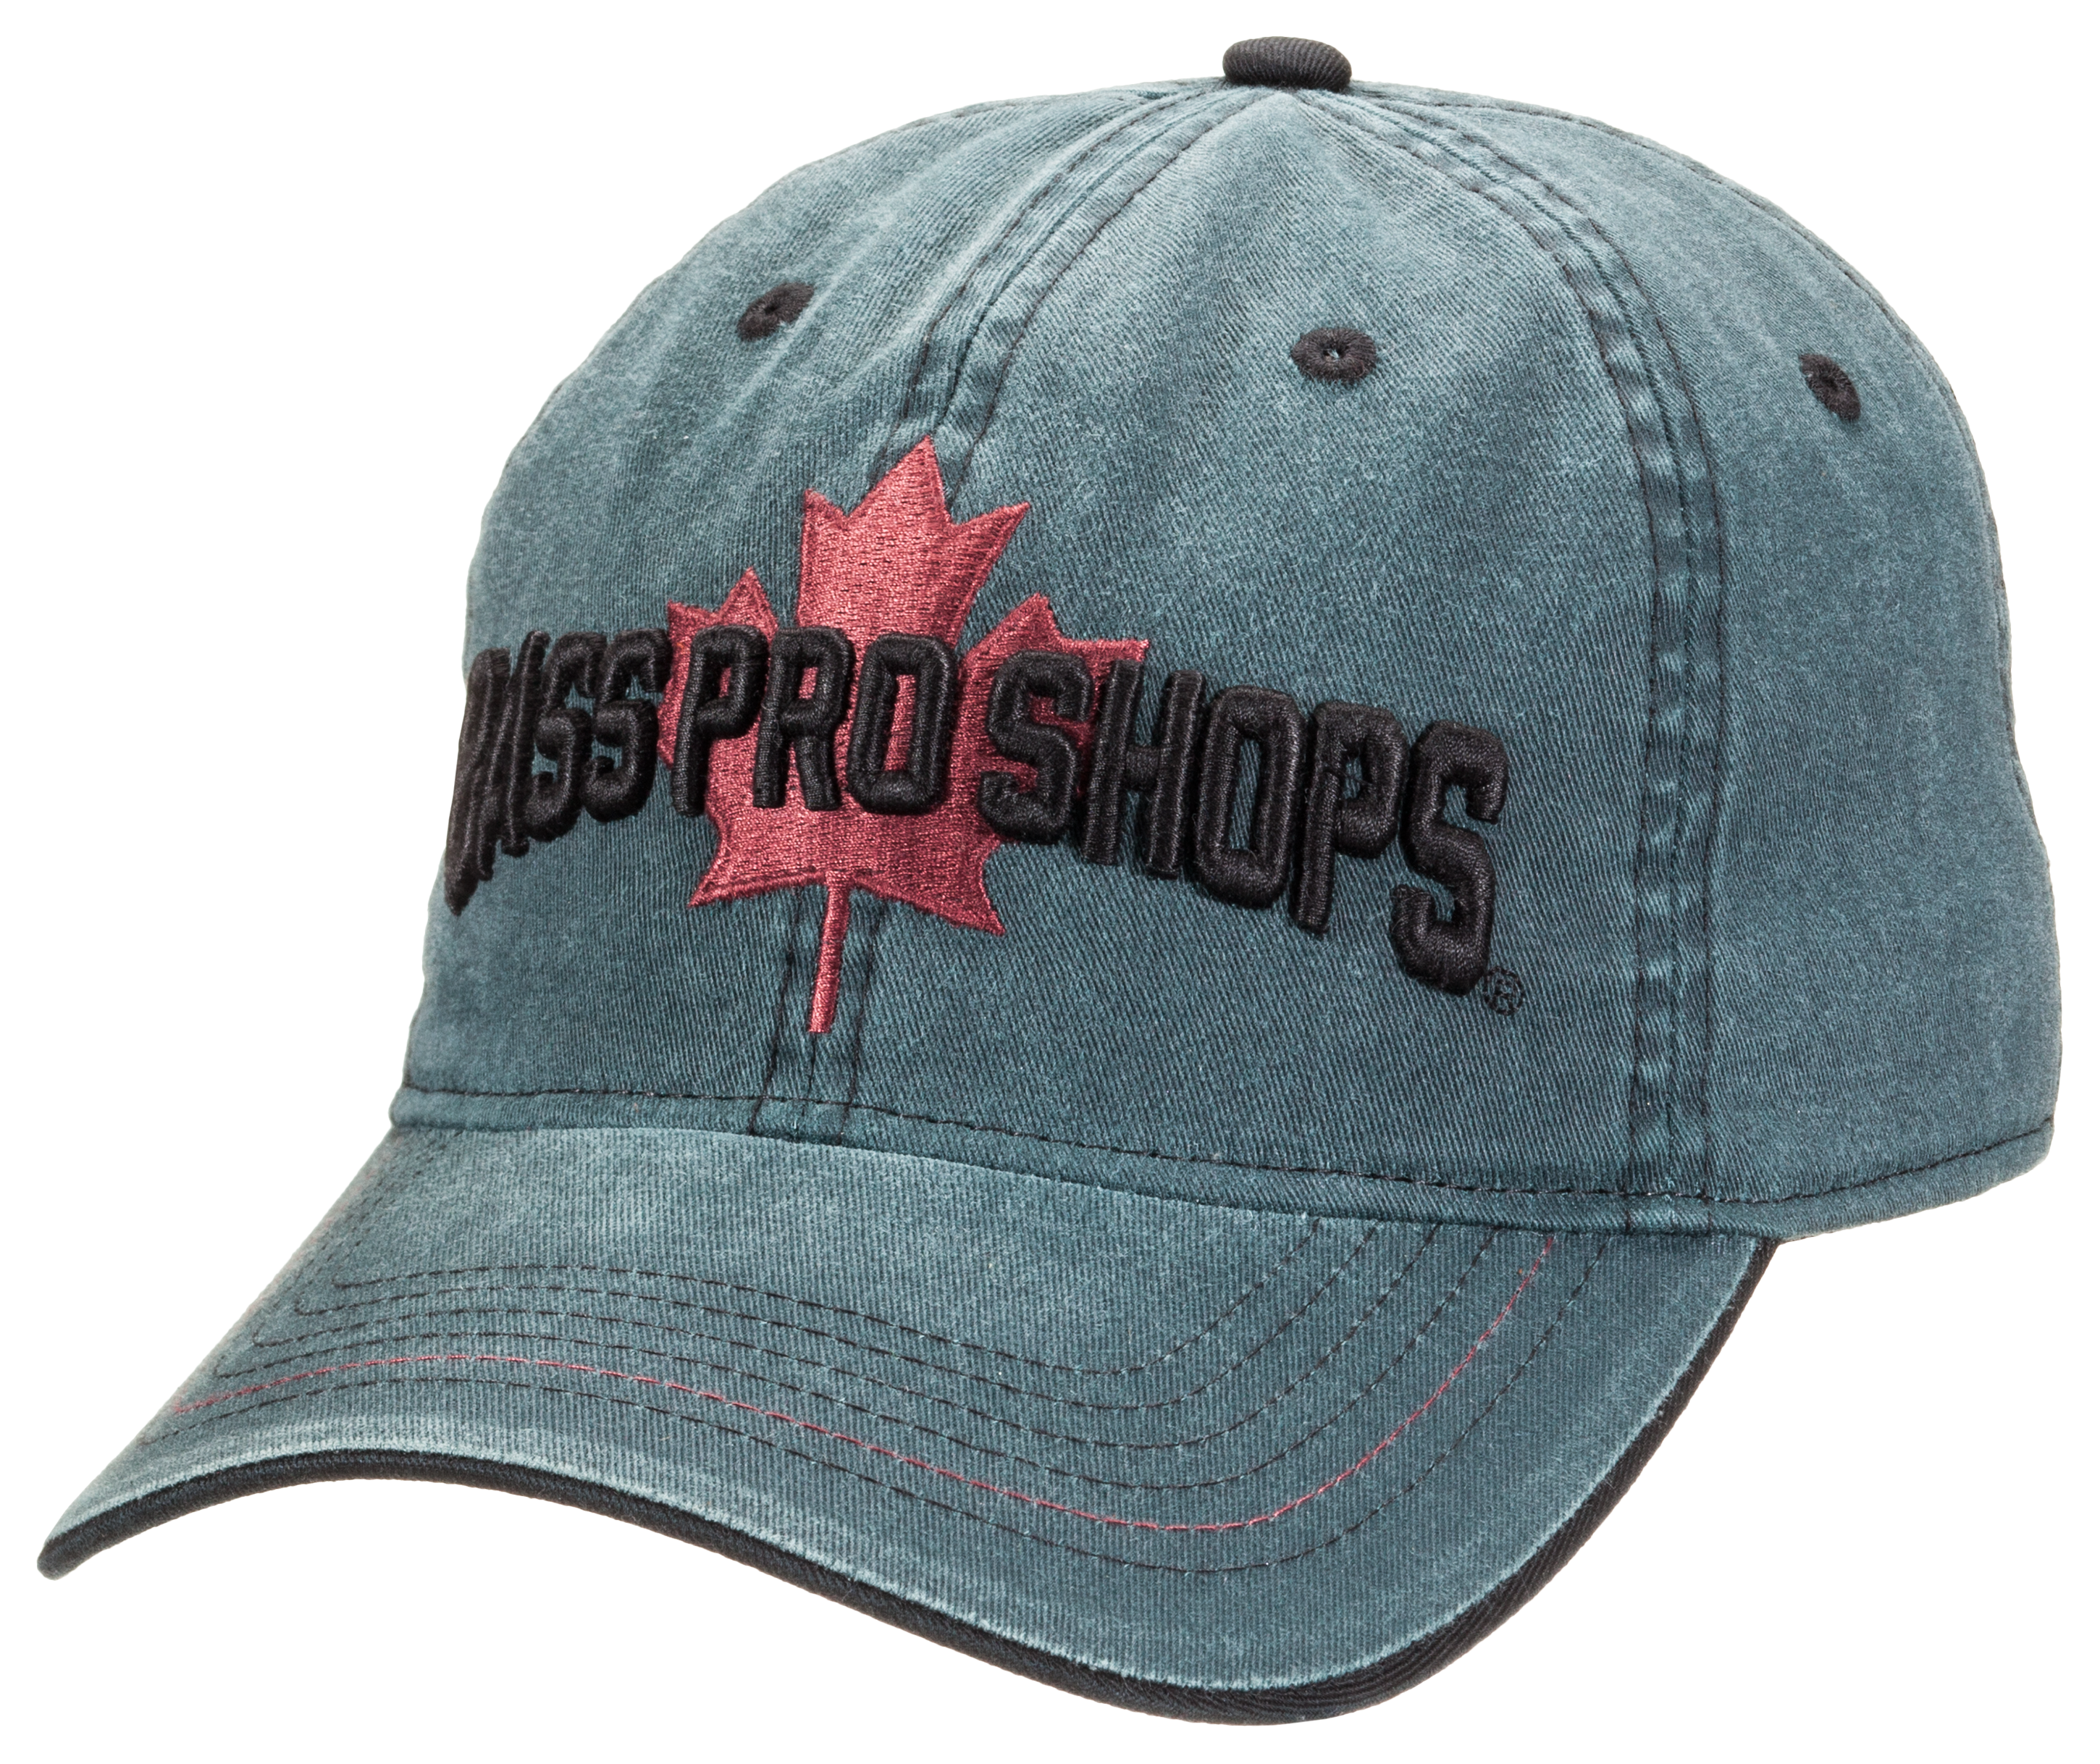 Bass Pro Shops Canada Leaf Cap